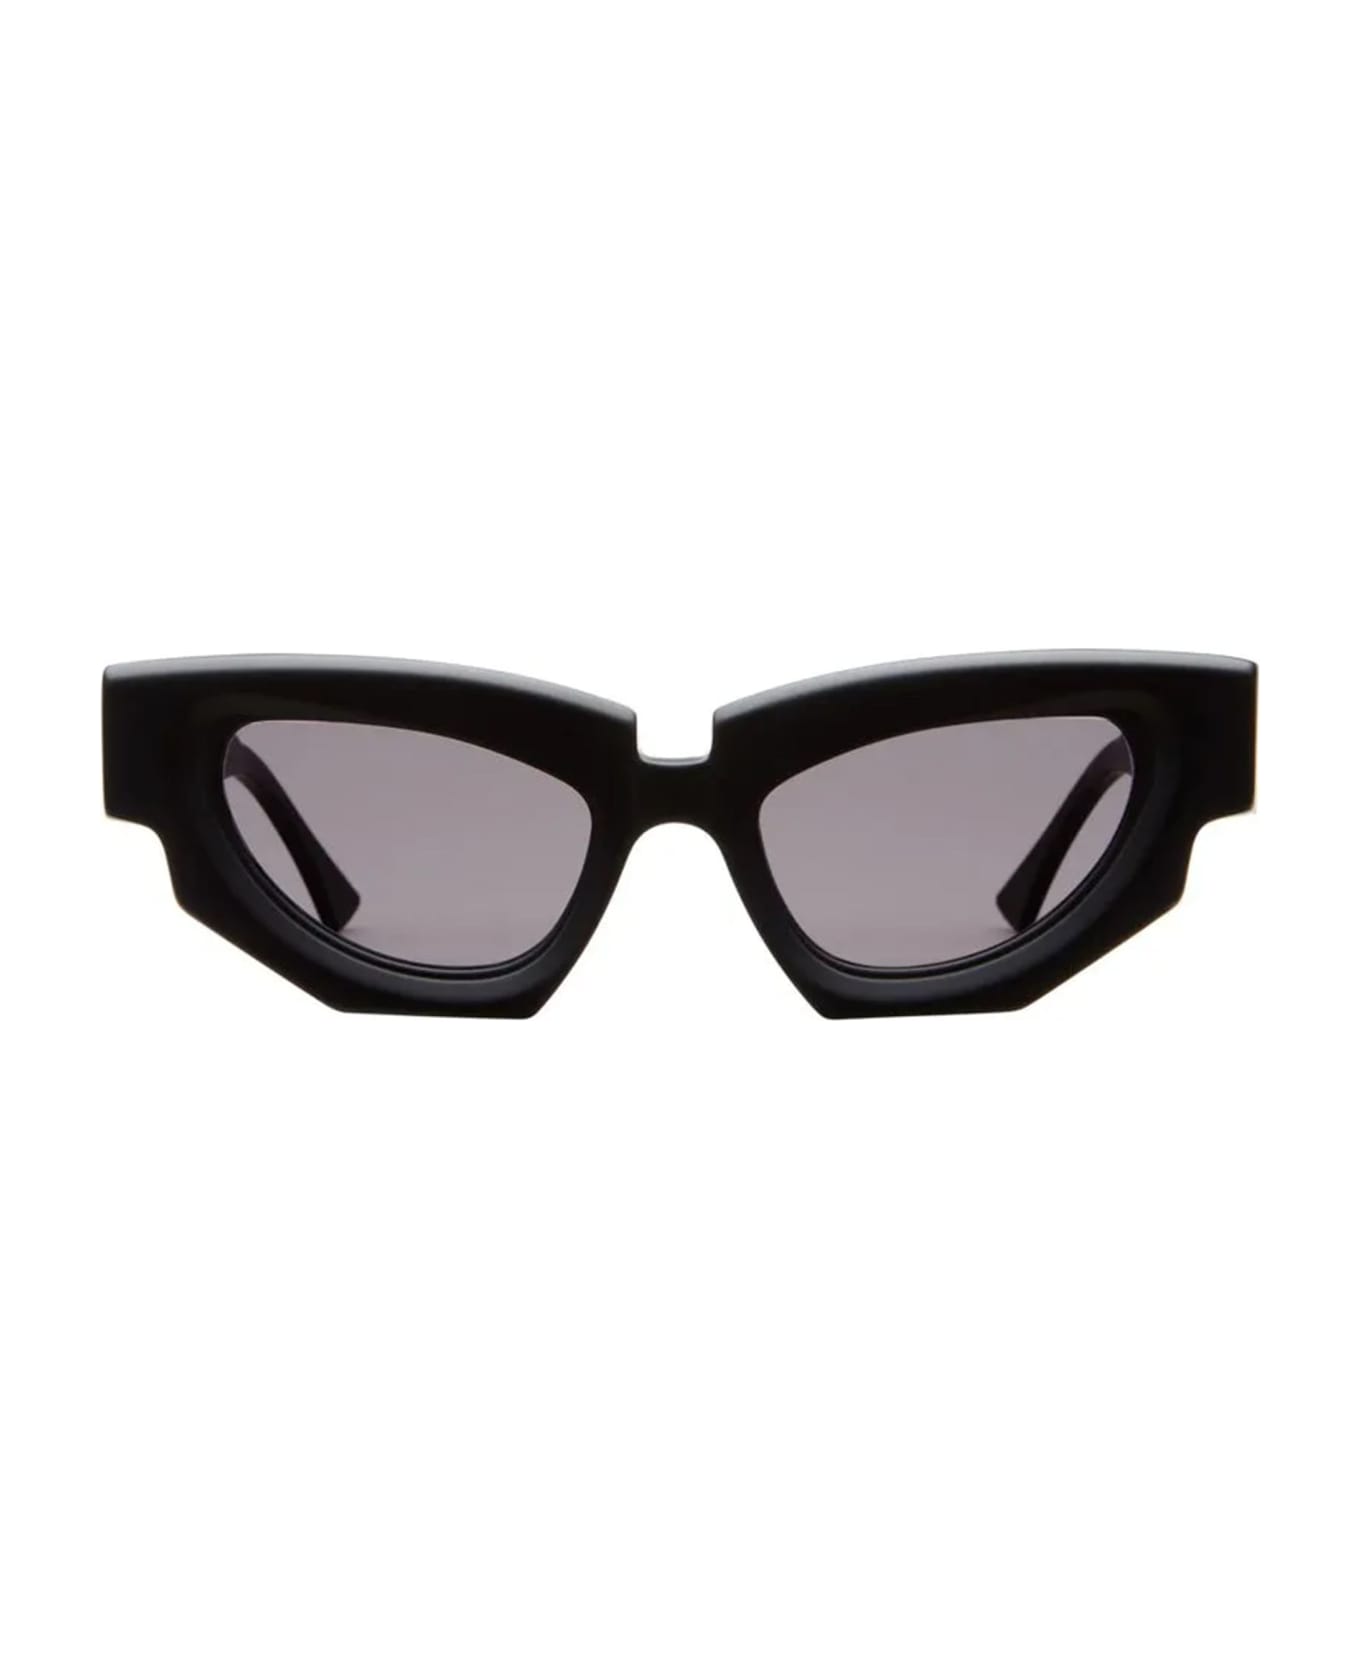 Kuboraum Mask F5 - Black Matte Sunglasses - Matte black